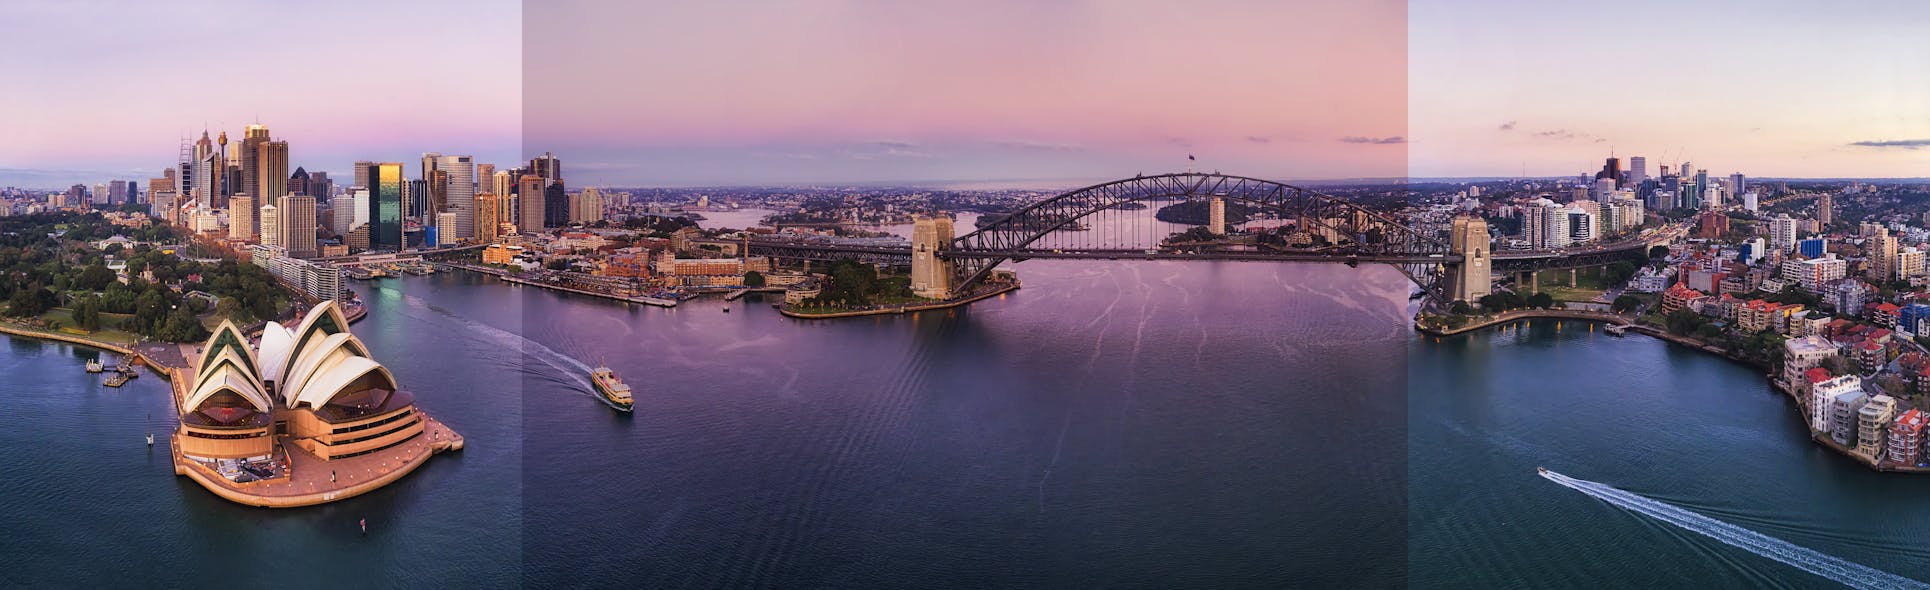 Location shot of Sydney